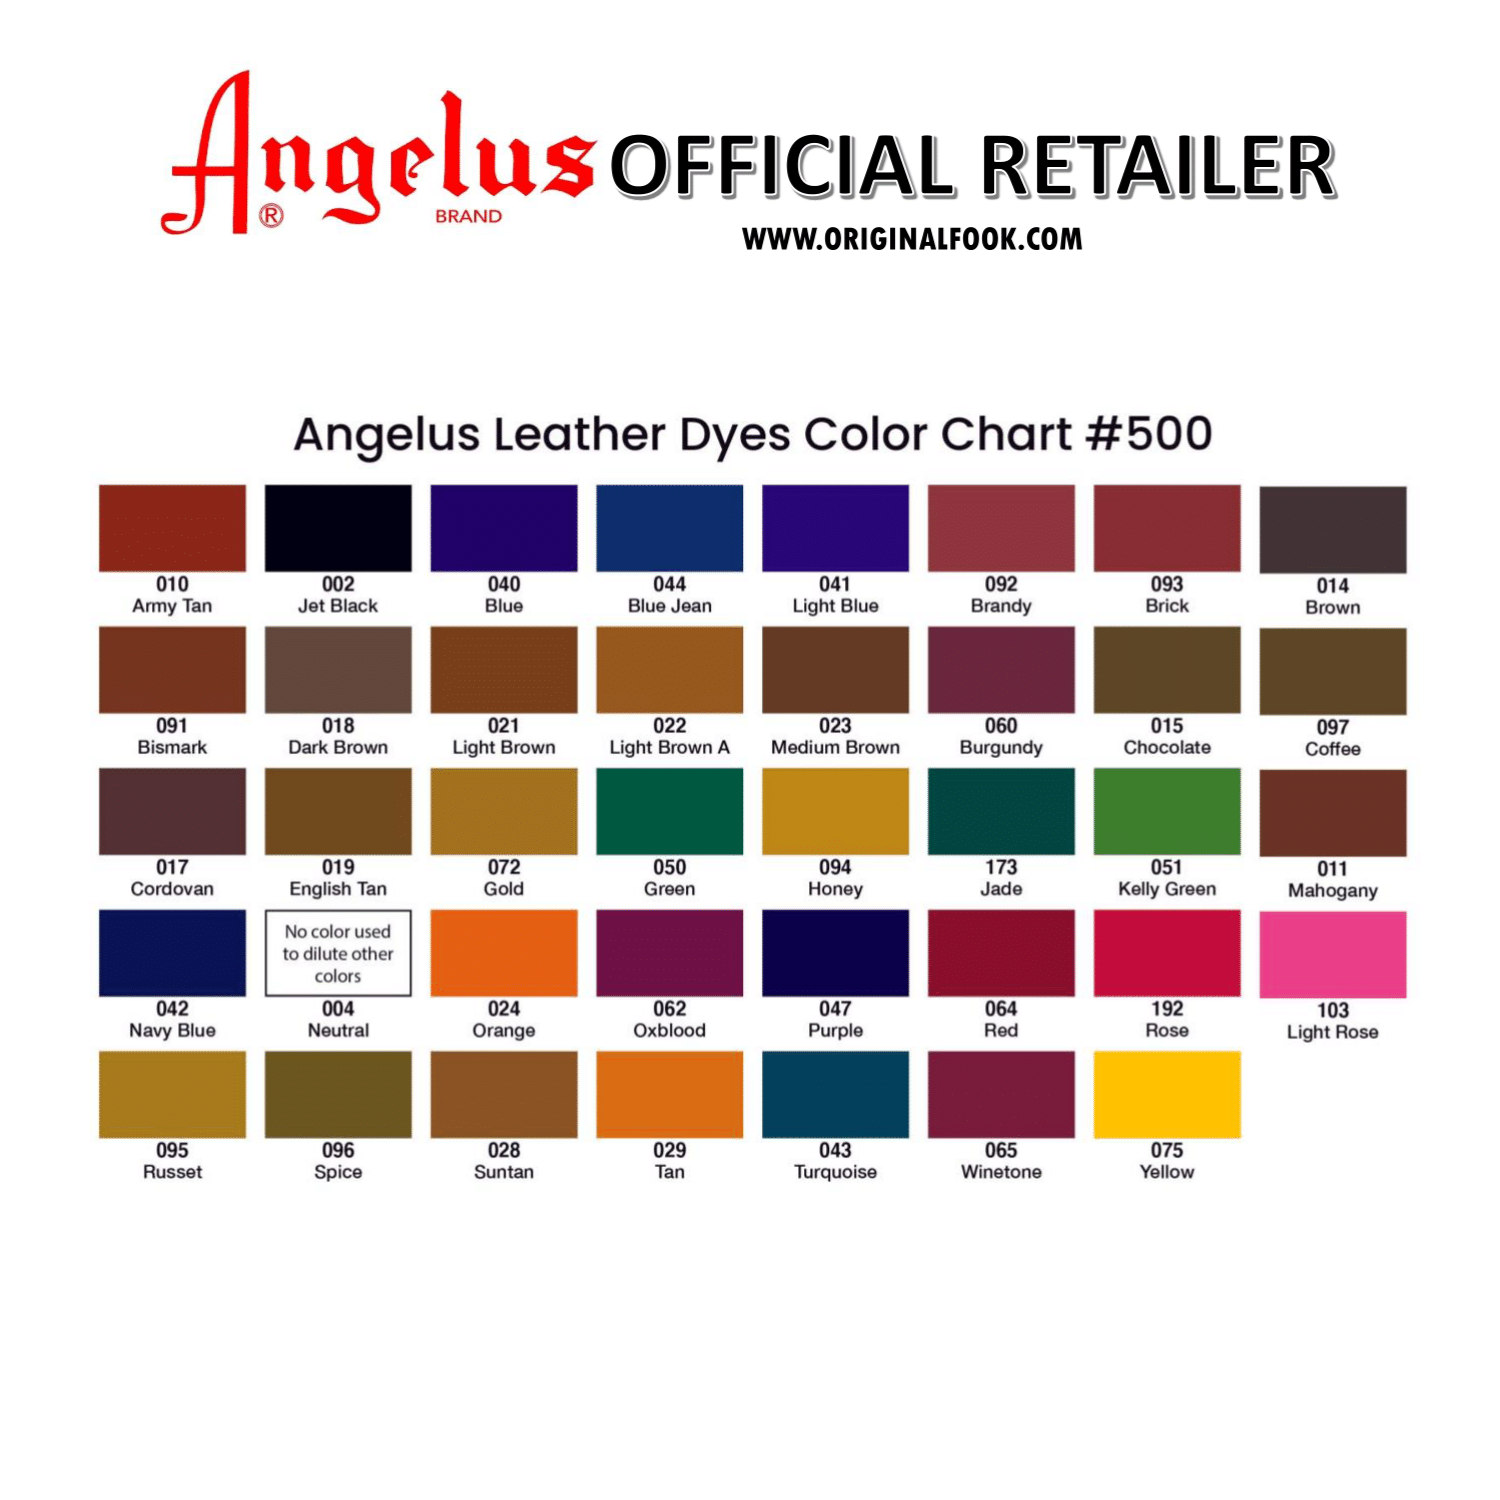 39 Colors) Angelus Leather Dye 3oz